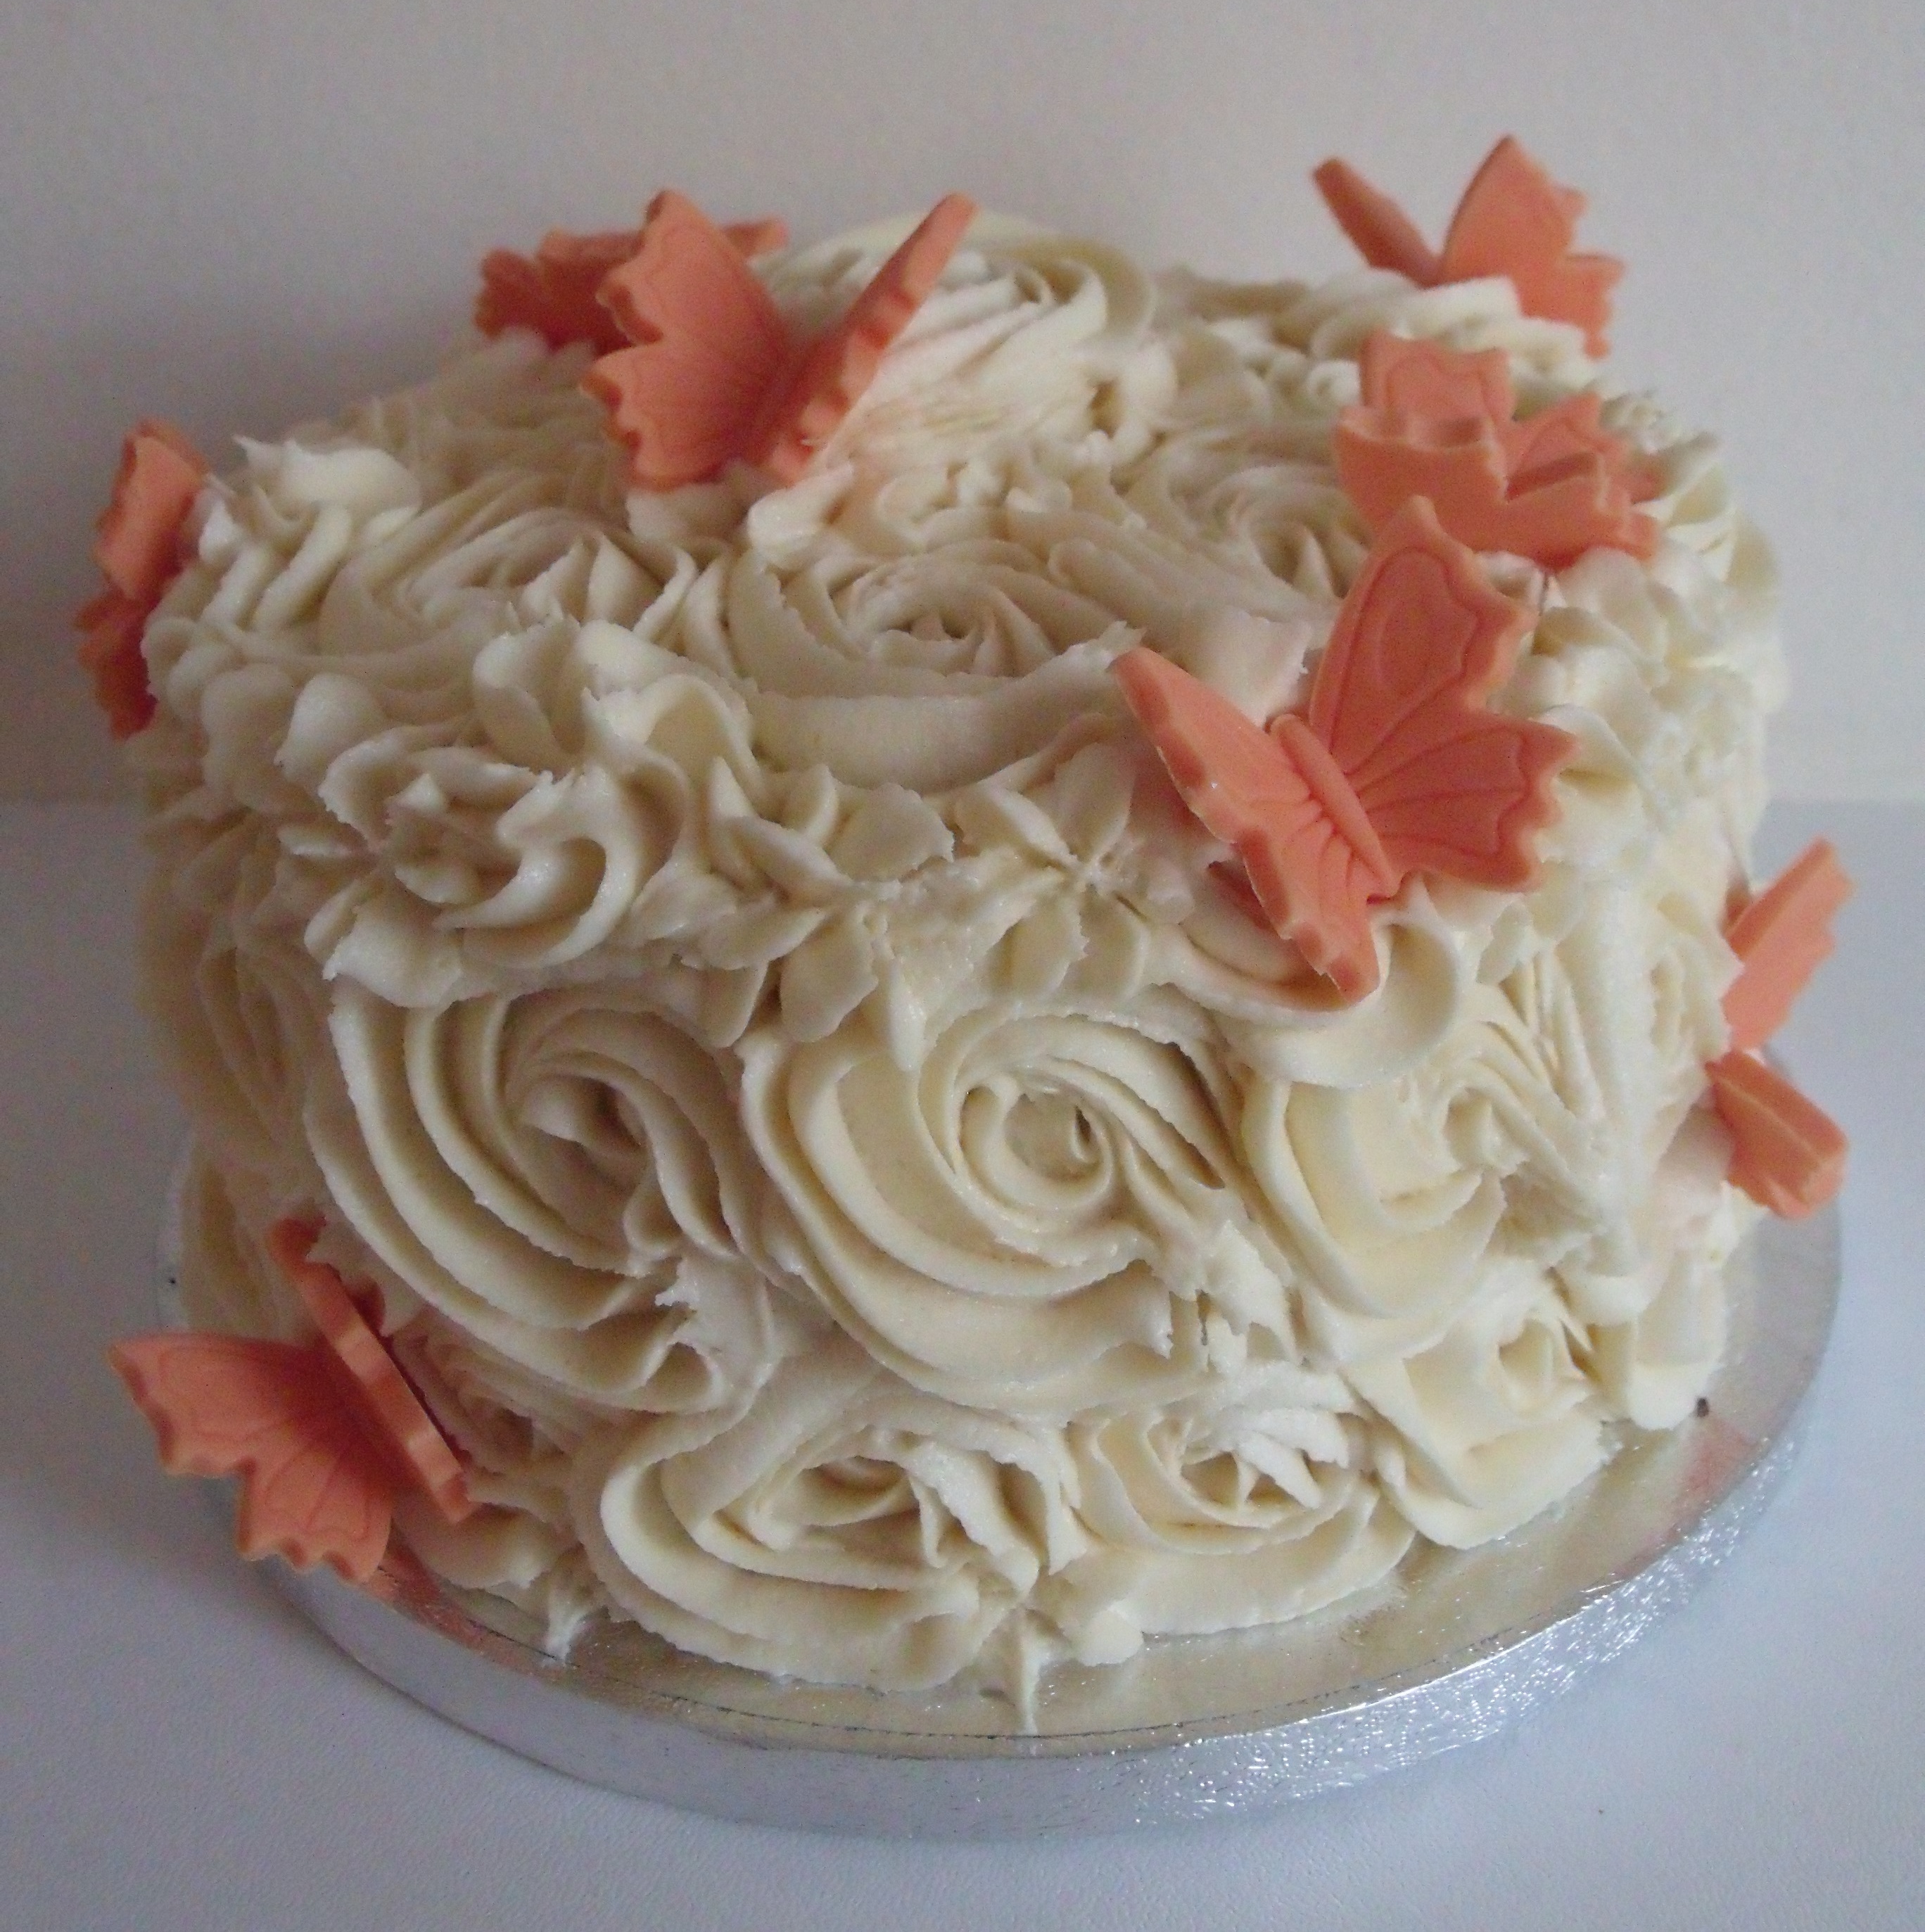 Buttercream Birthday Cake